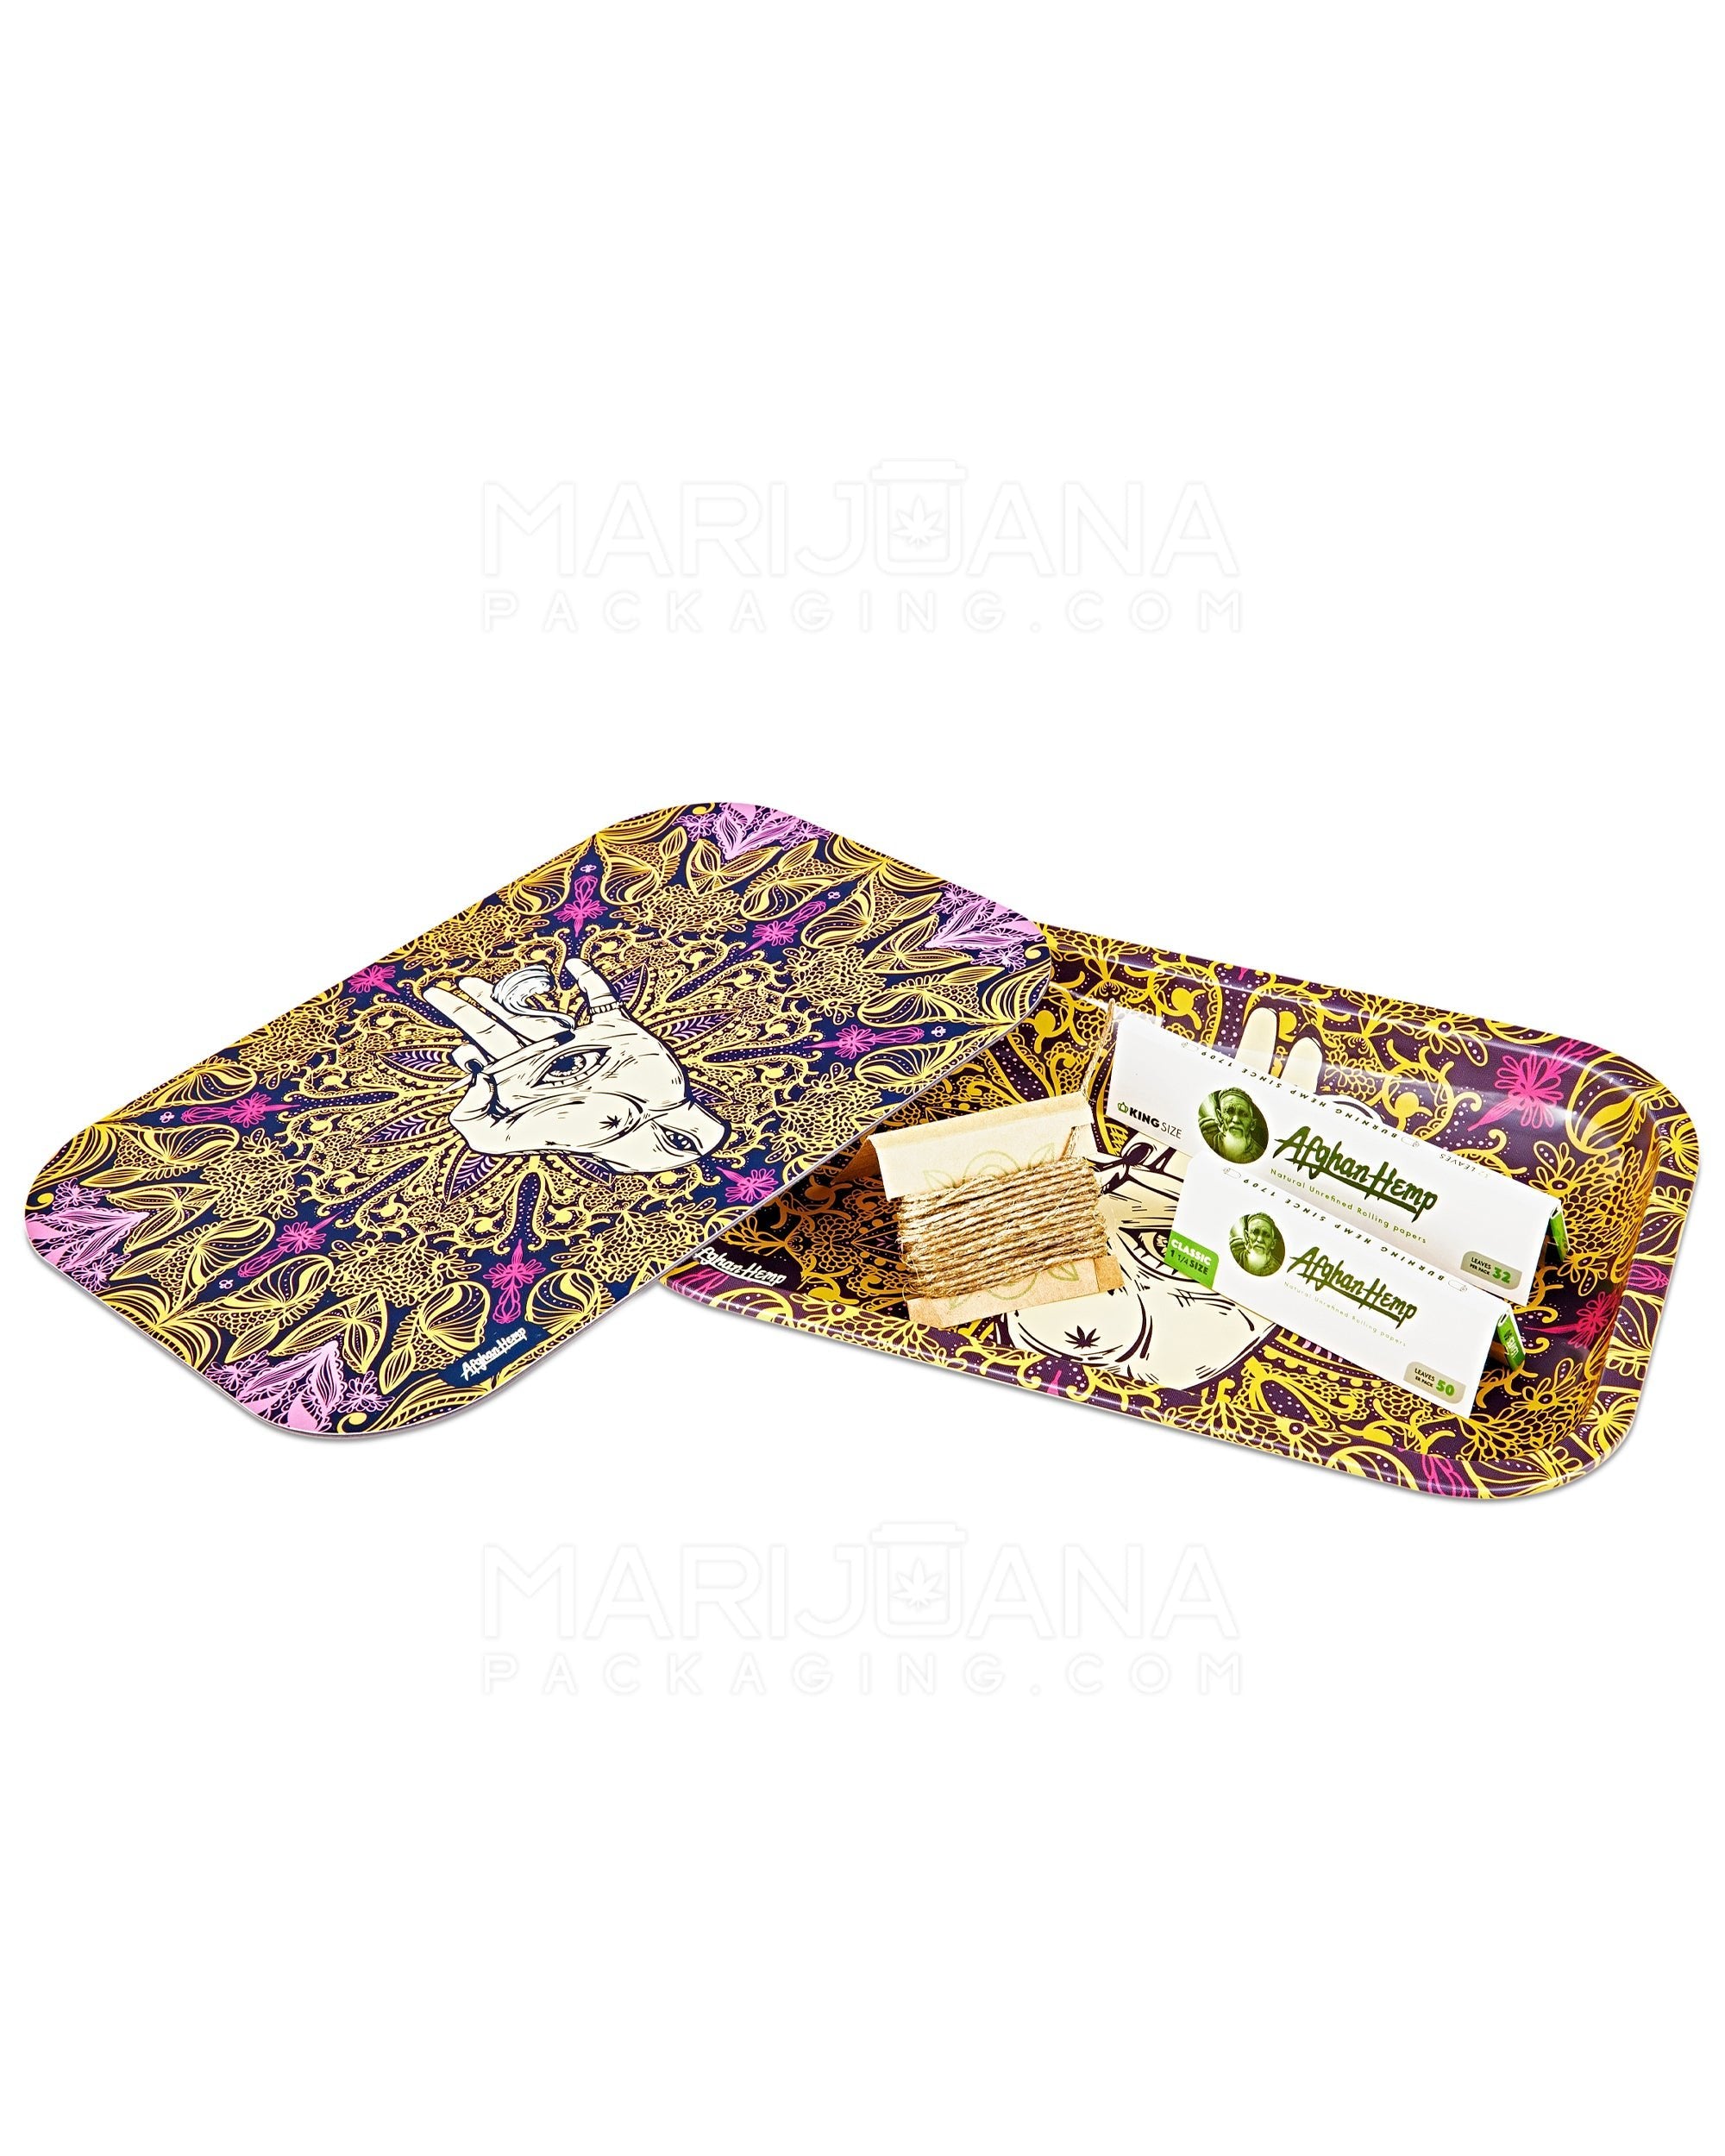 AFGHAN HEMP | Assorted Hamsa Hand Rolling Tray Kit w/ Hemp Rolling Papers & Wick | 6in x 9in - Small - Metal - 1